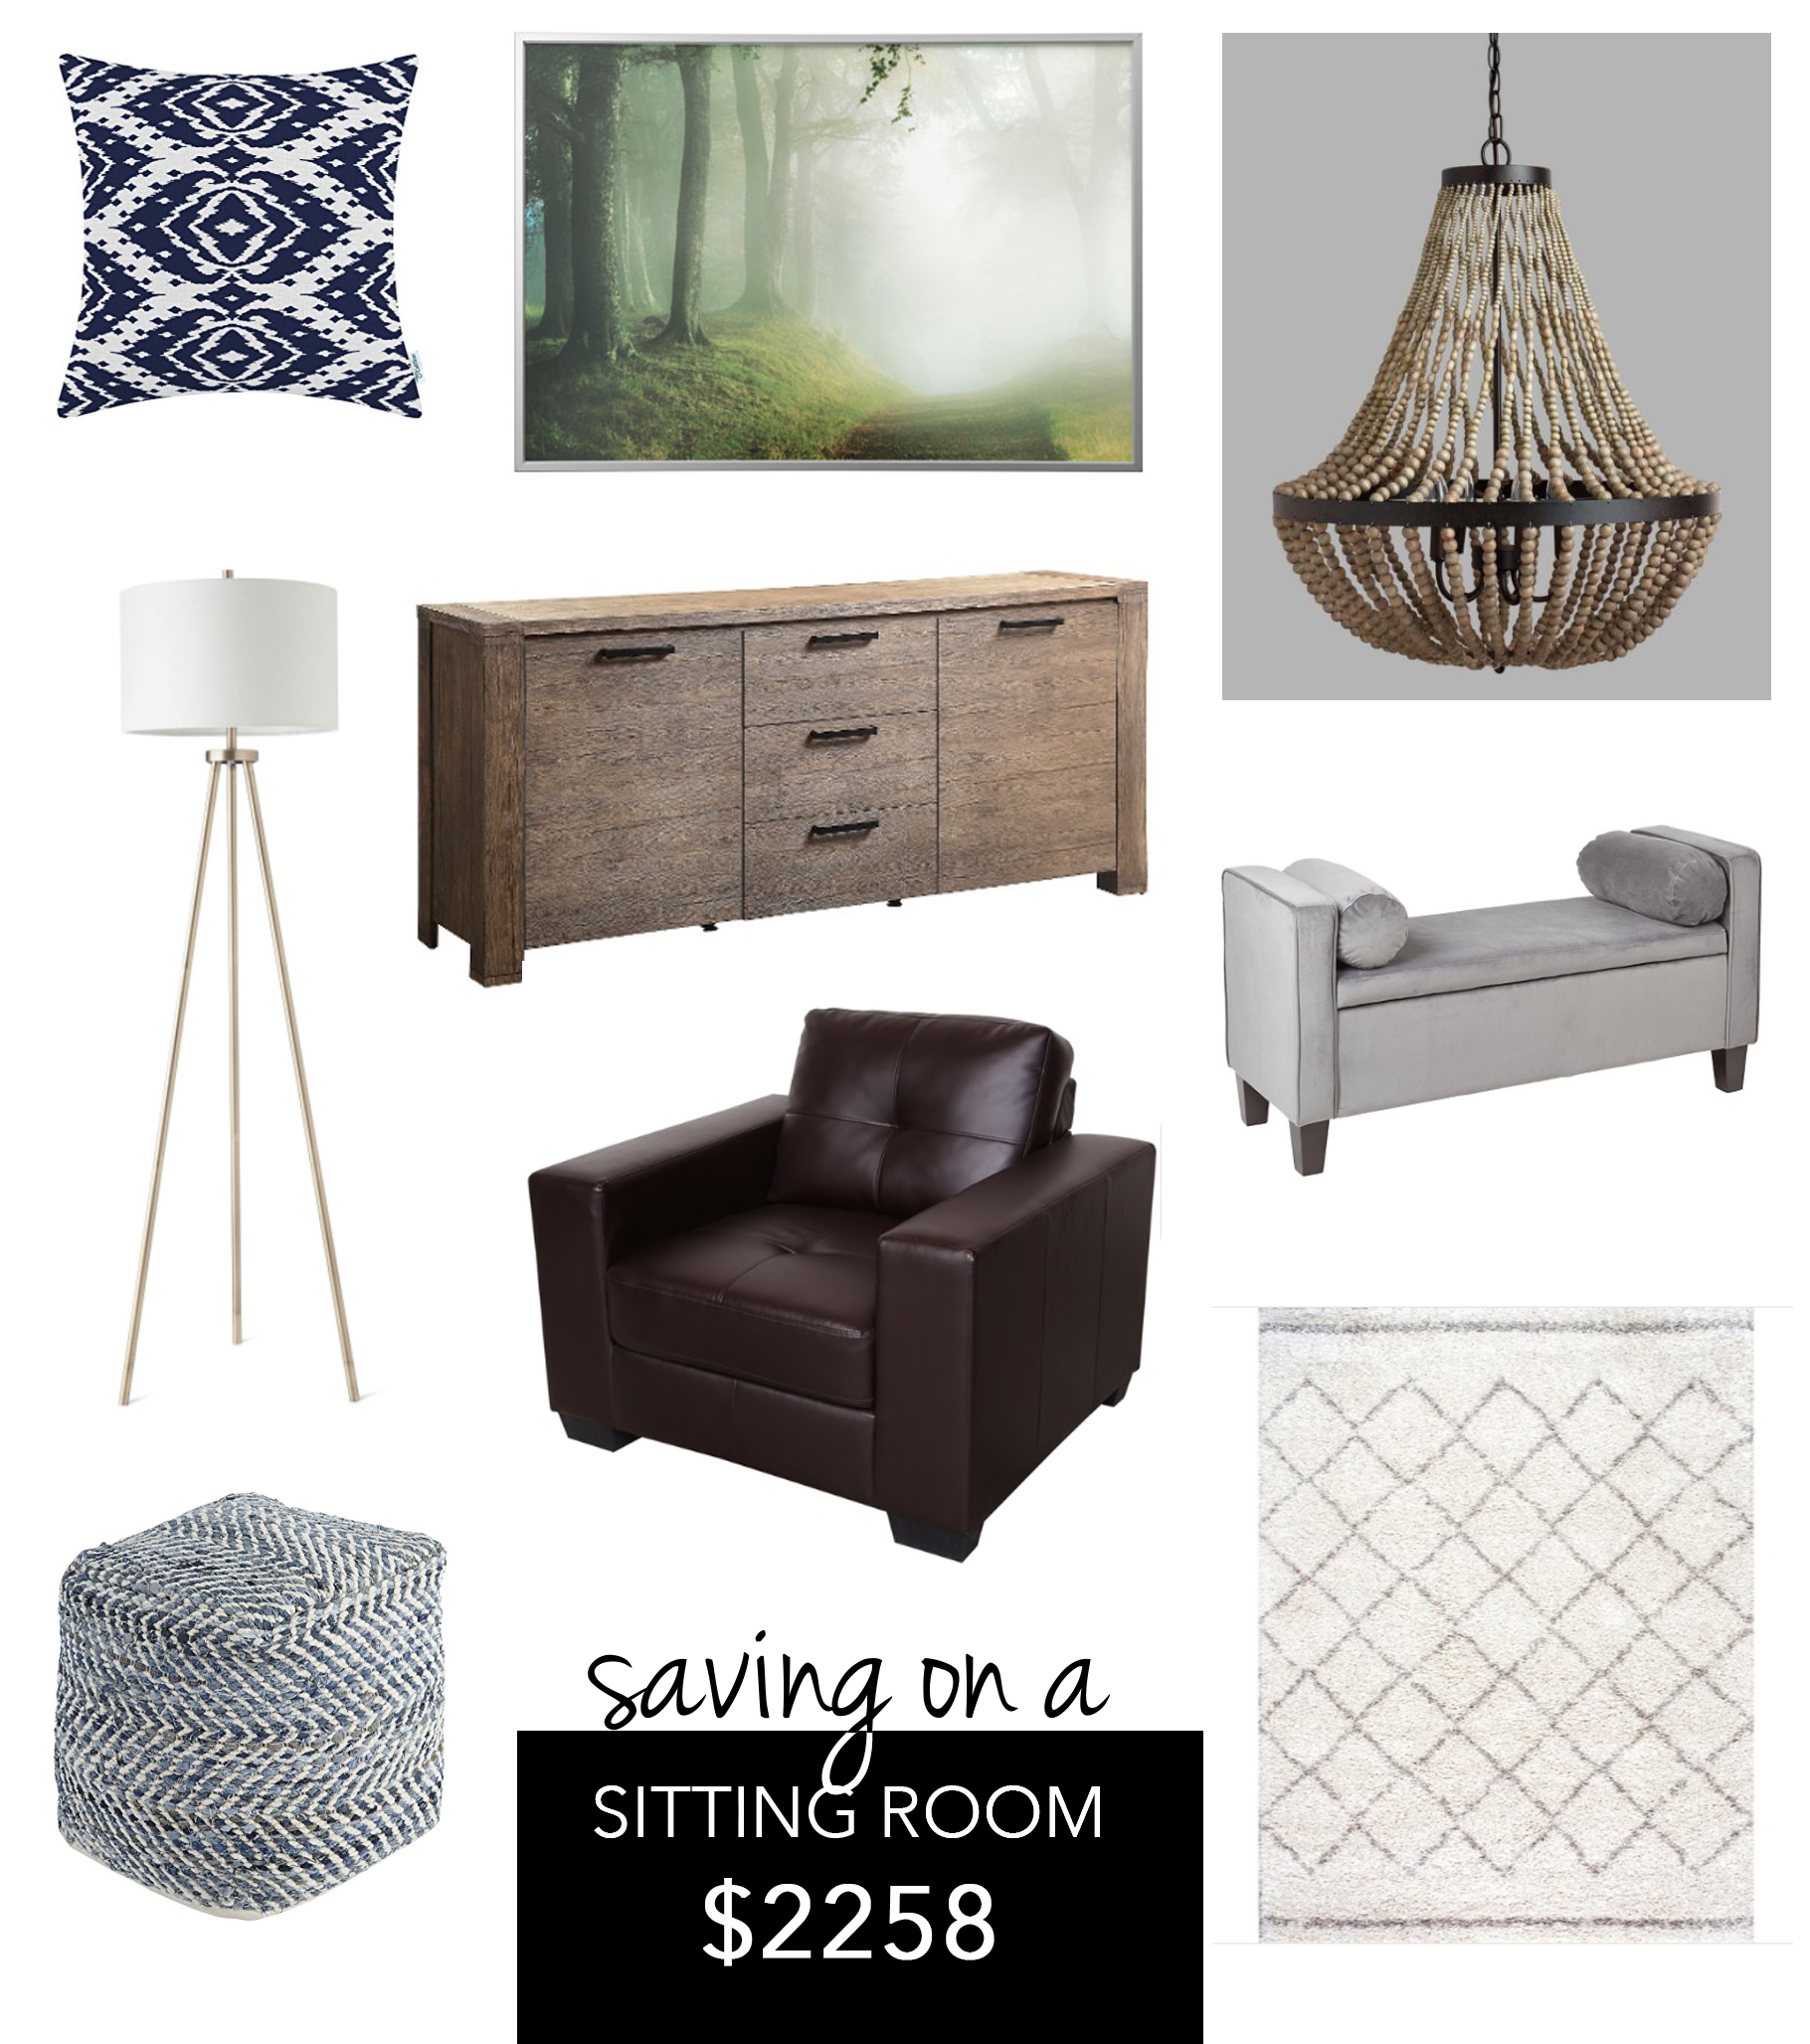 Our Sitting Room – Save Vs Splurge